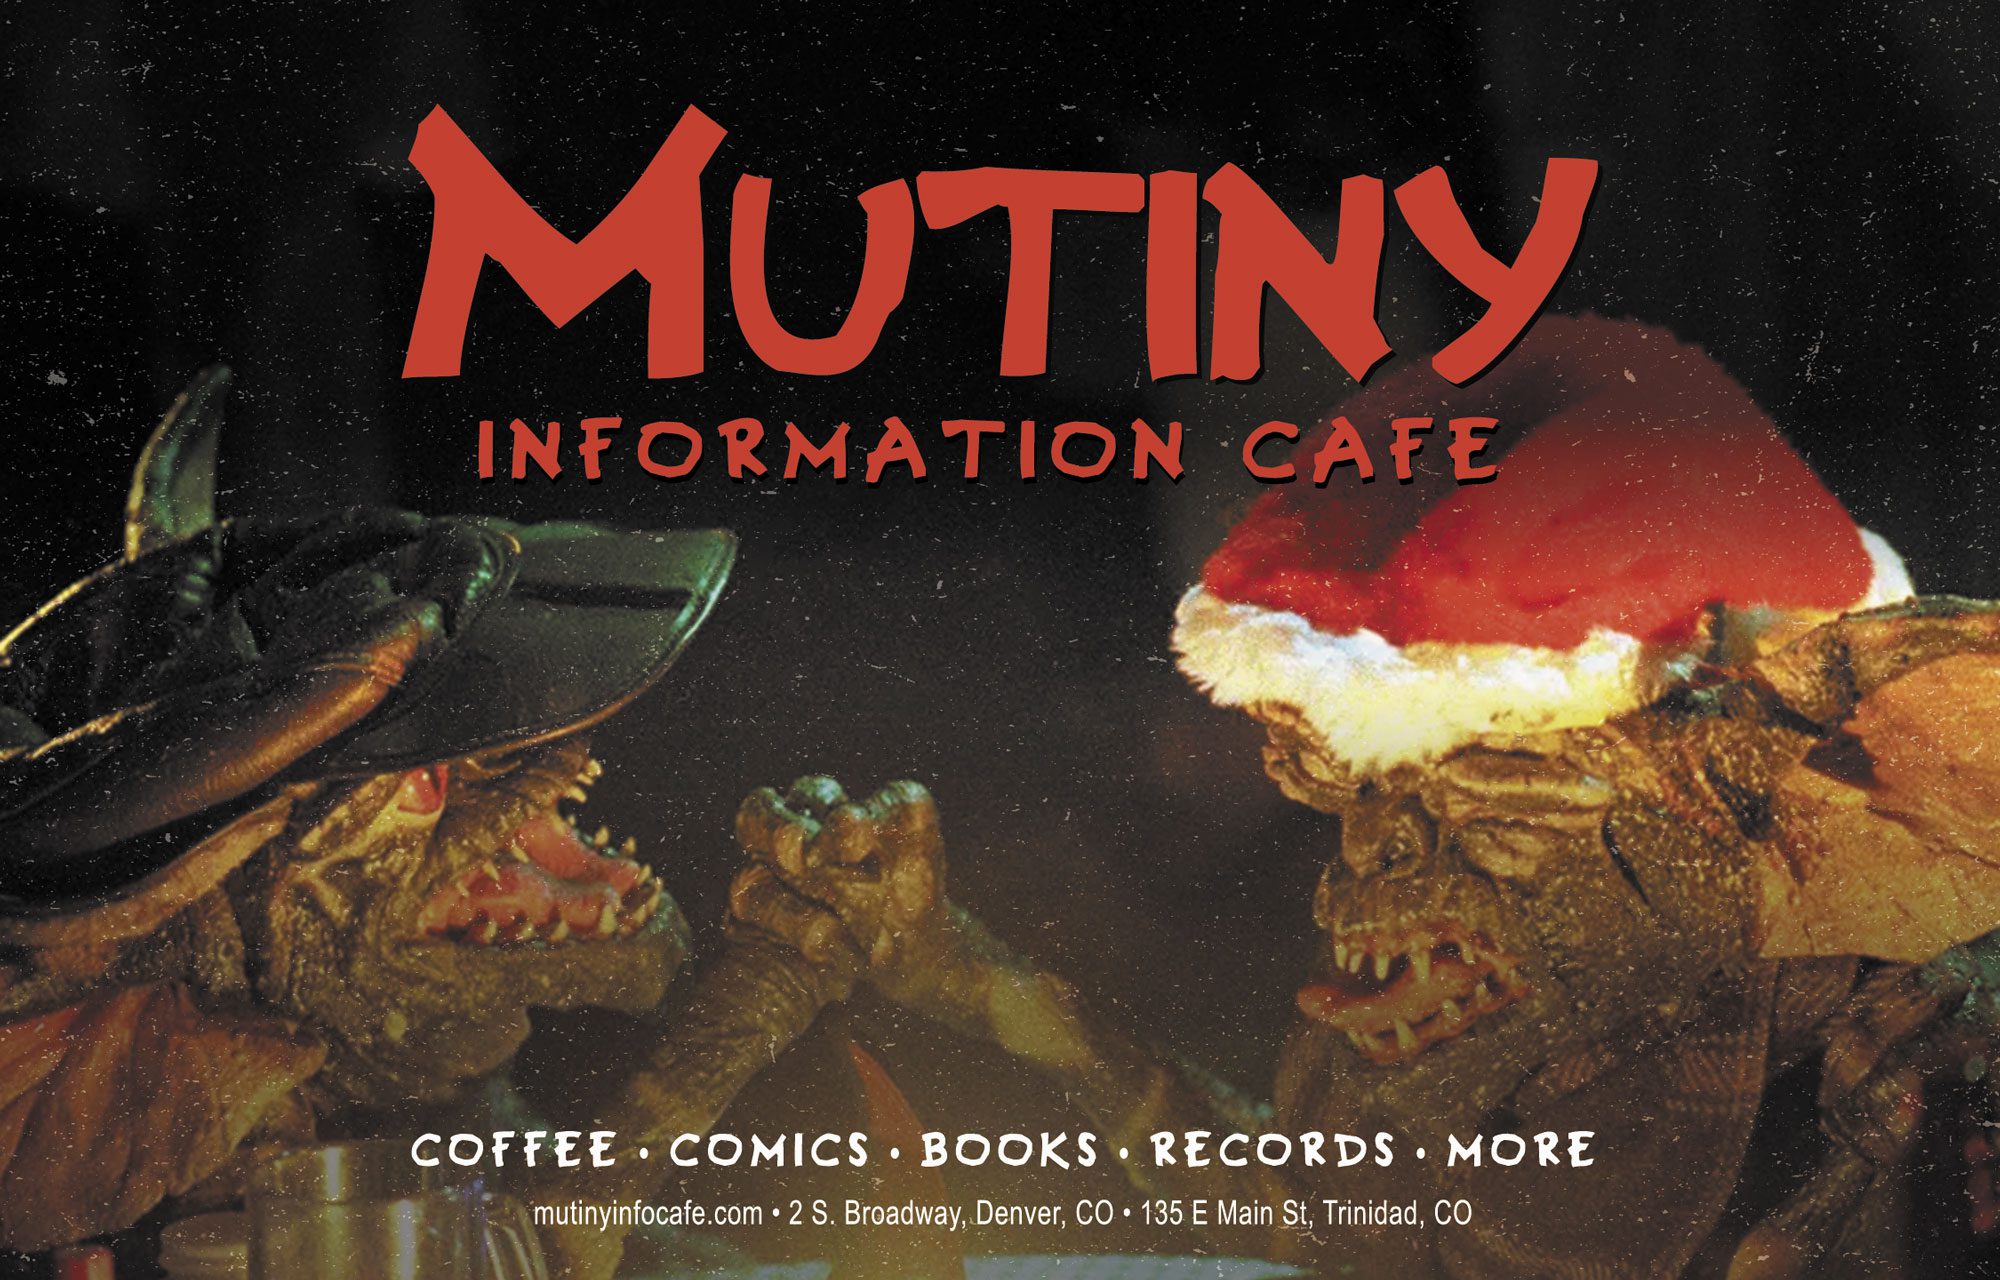 Mutiny Information Cafe Denver and Trinidad, Colorado